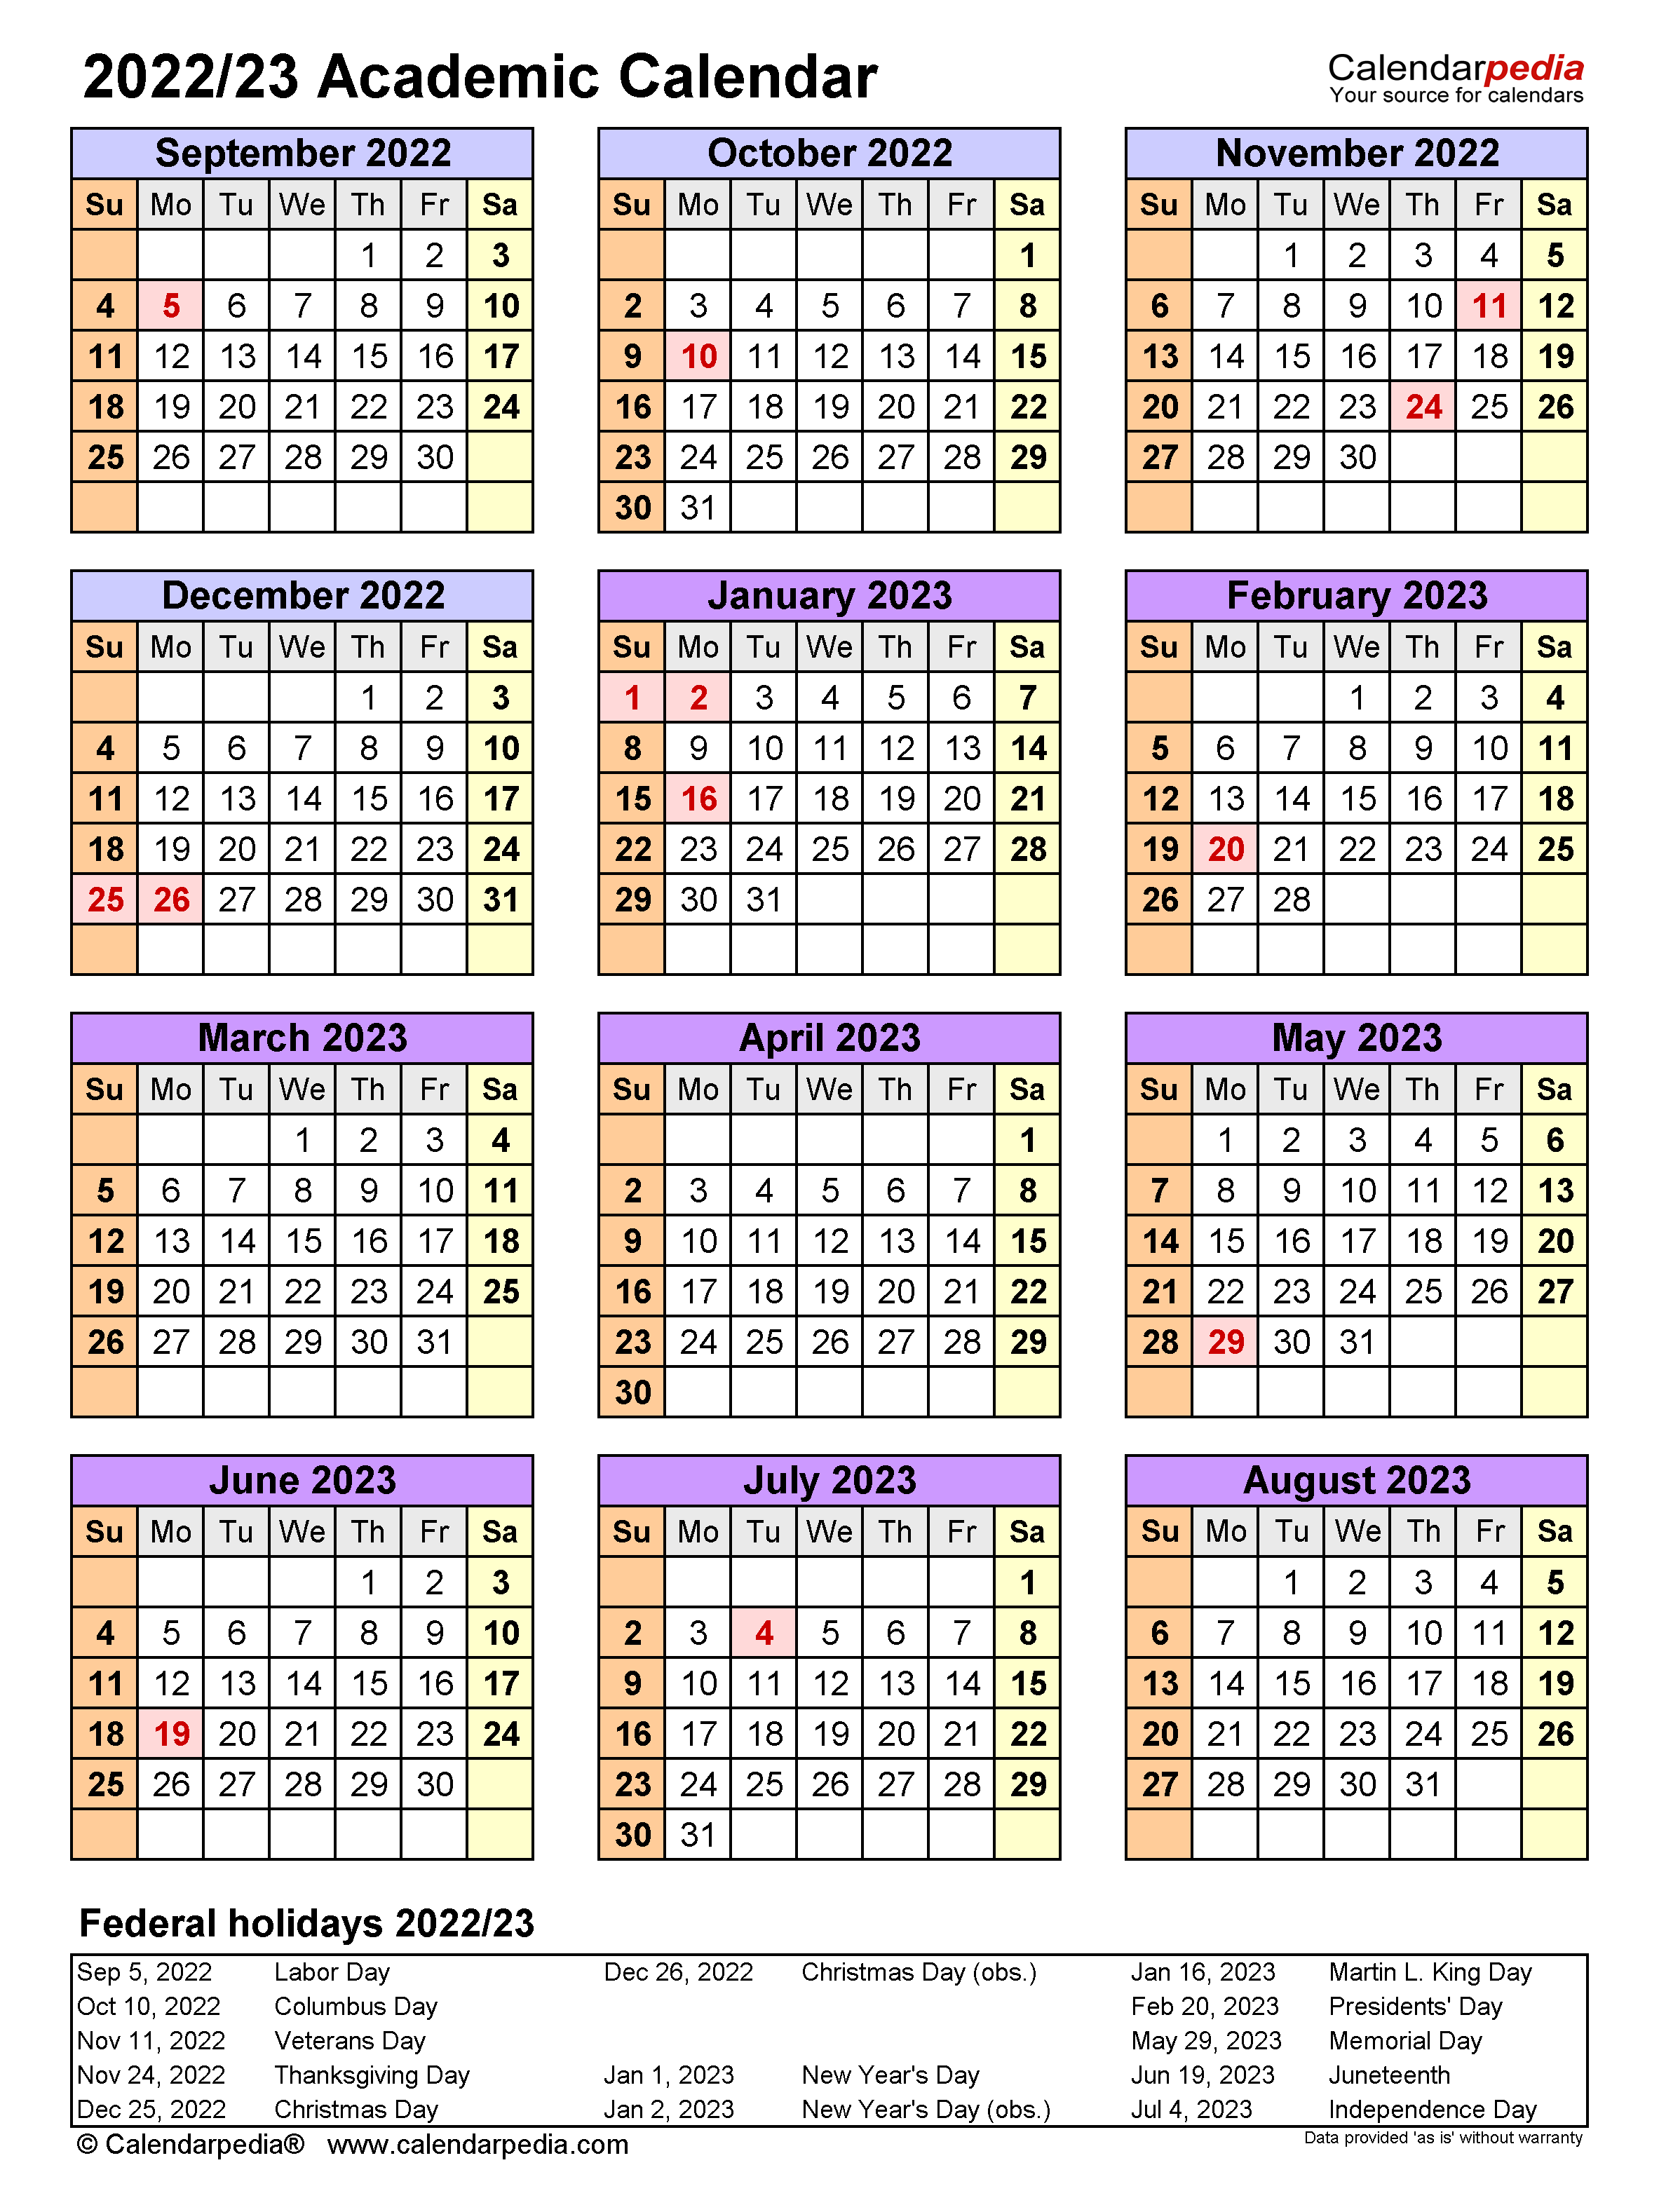 cwu-calendar-spring-2024-september-2024-calendar